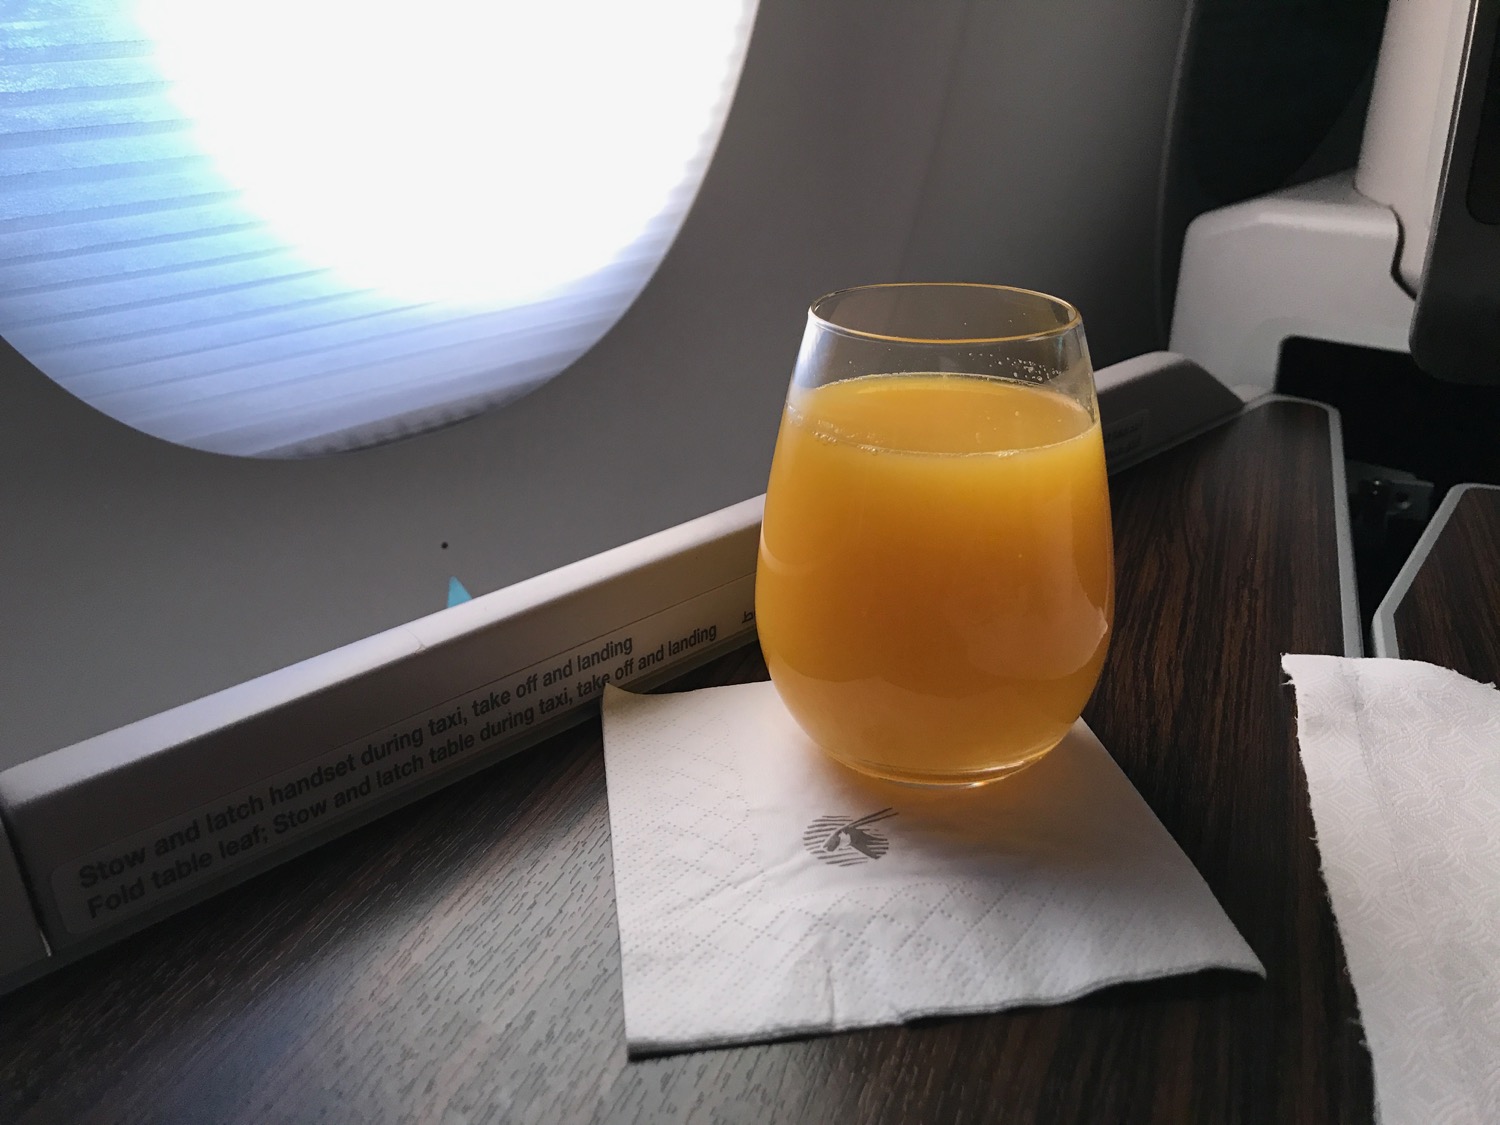 a glass of orange juice on a napkin on a table